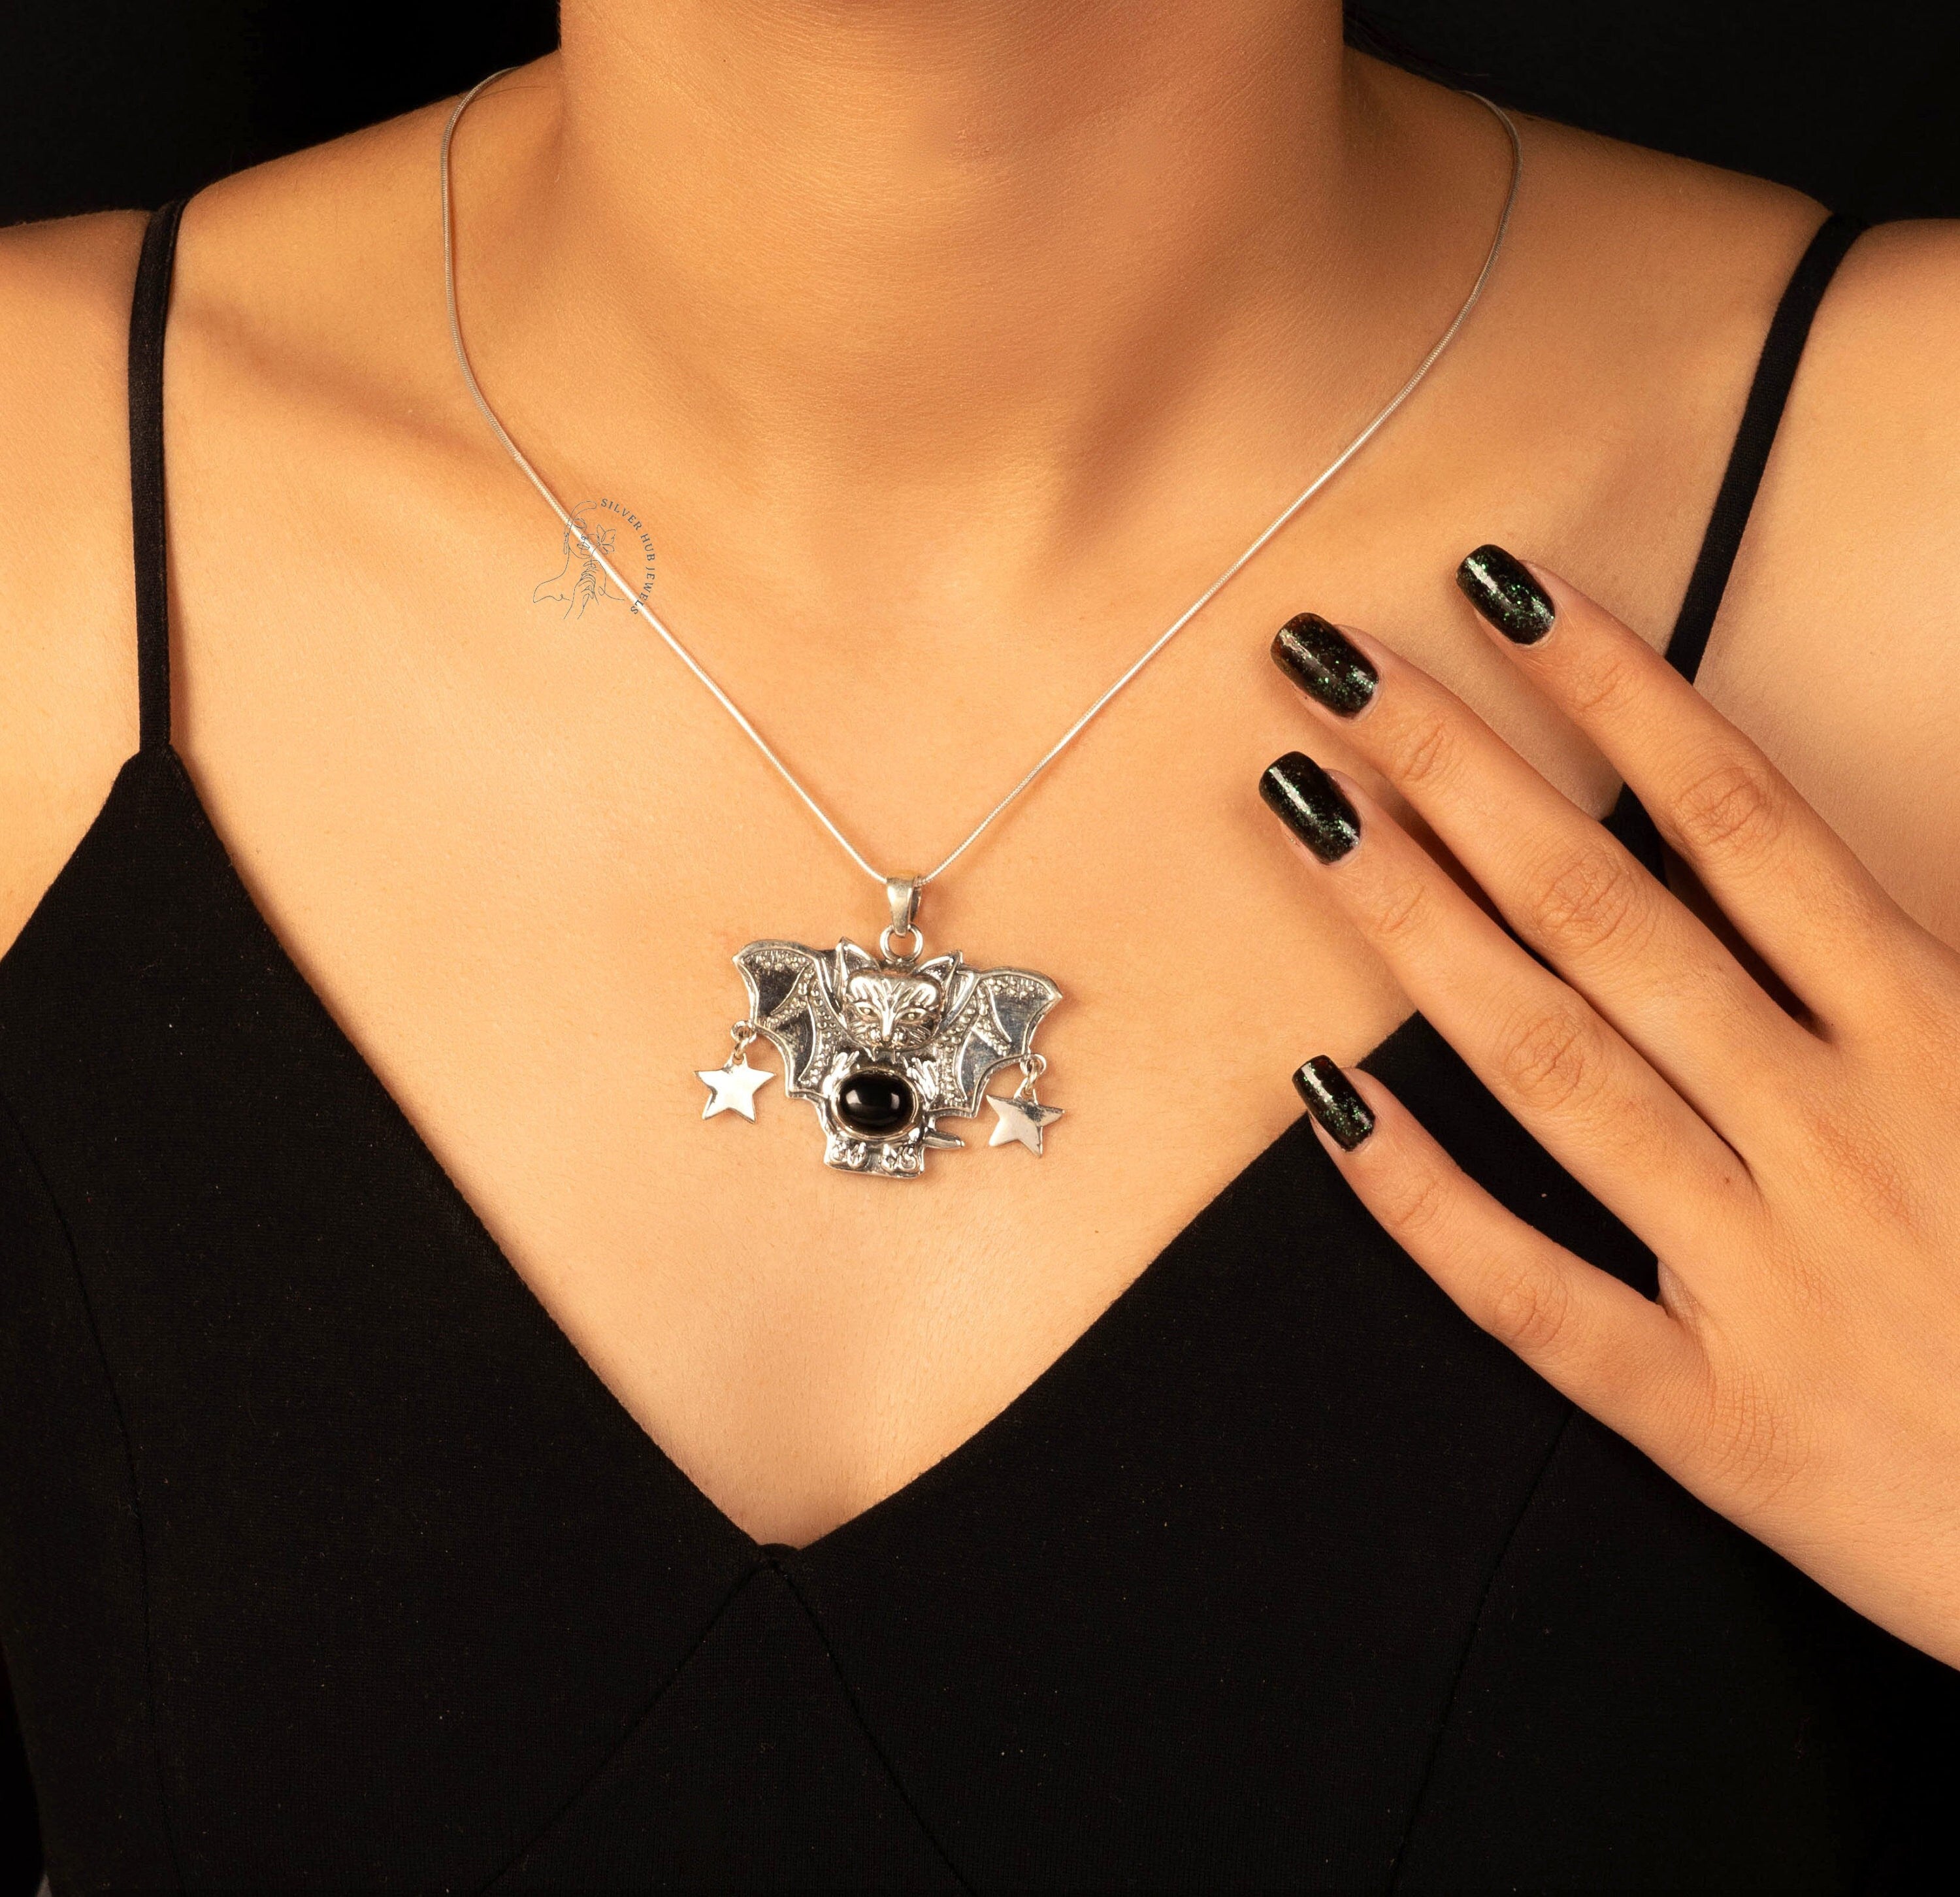 Precious Black Onyx Pendant, Gemstone Pendant, Black Pendant, 925 Sterling Silver Jewelry, Engagement Gift, Pendant For Sister